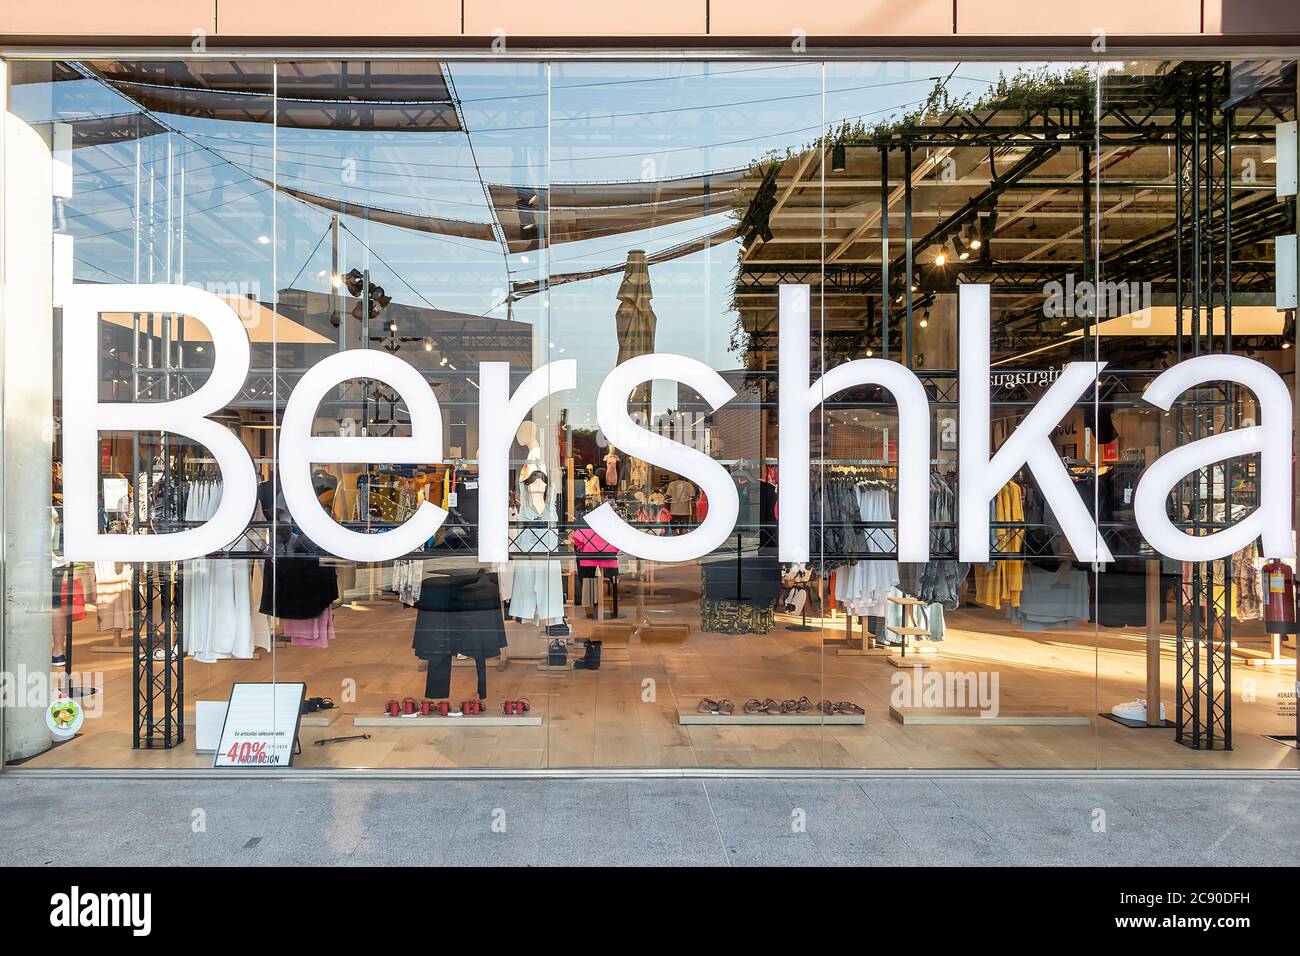 Huelva, Spain - July 27, 2020: Bershka fashion store in Holea Shopping center. Bershka is Spanish clothing retailer company Stock Photo